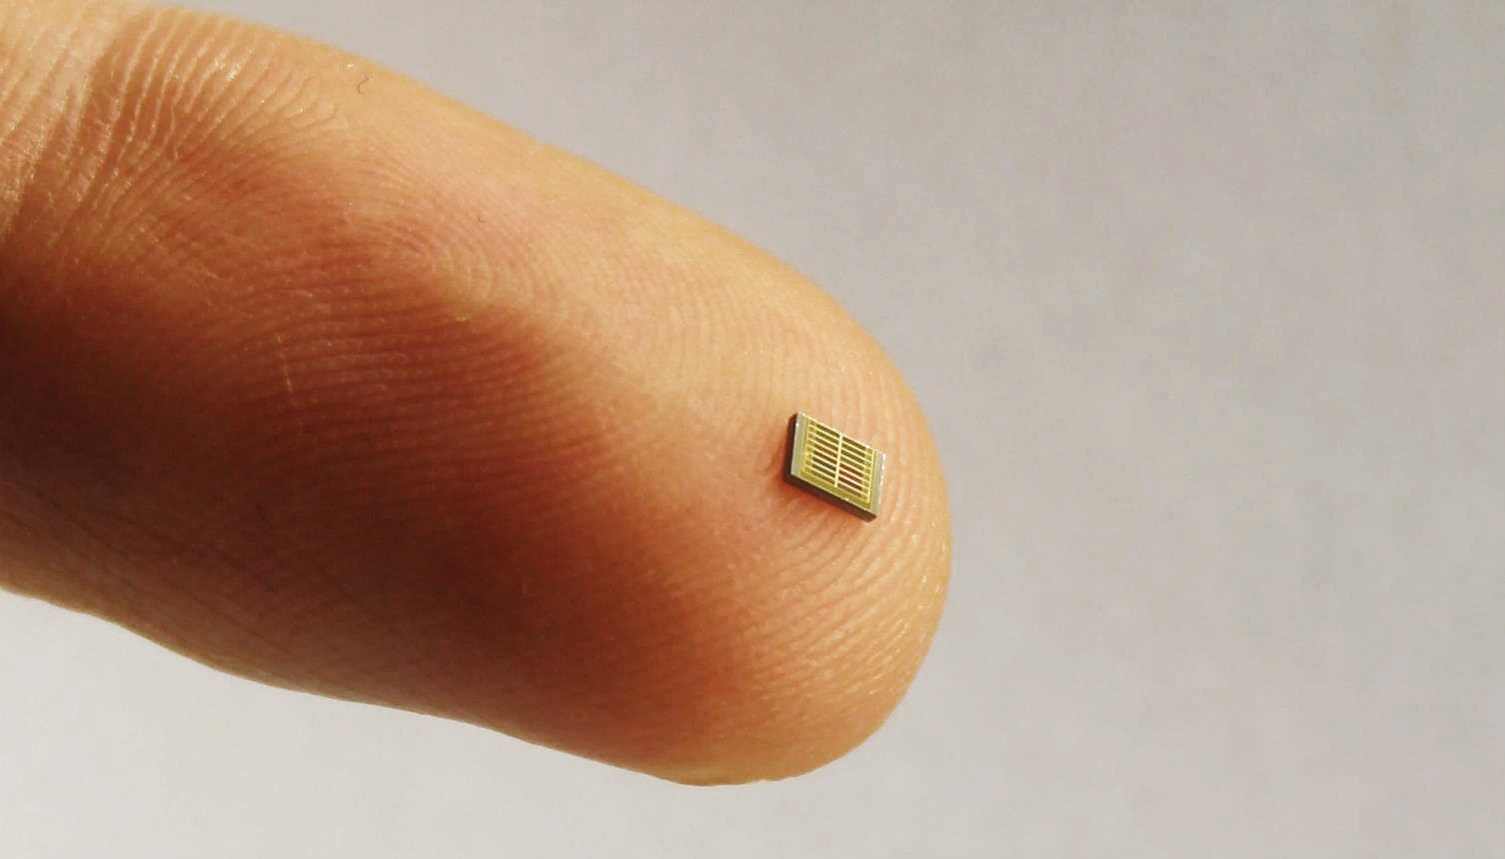 NIR-spectrometer in a single chip